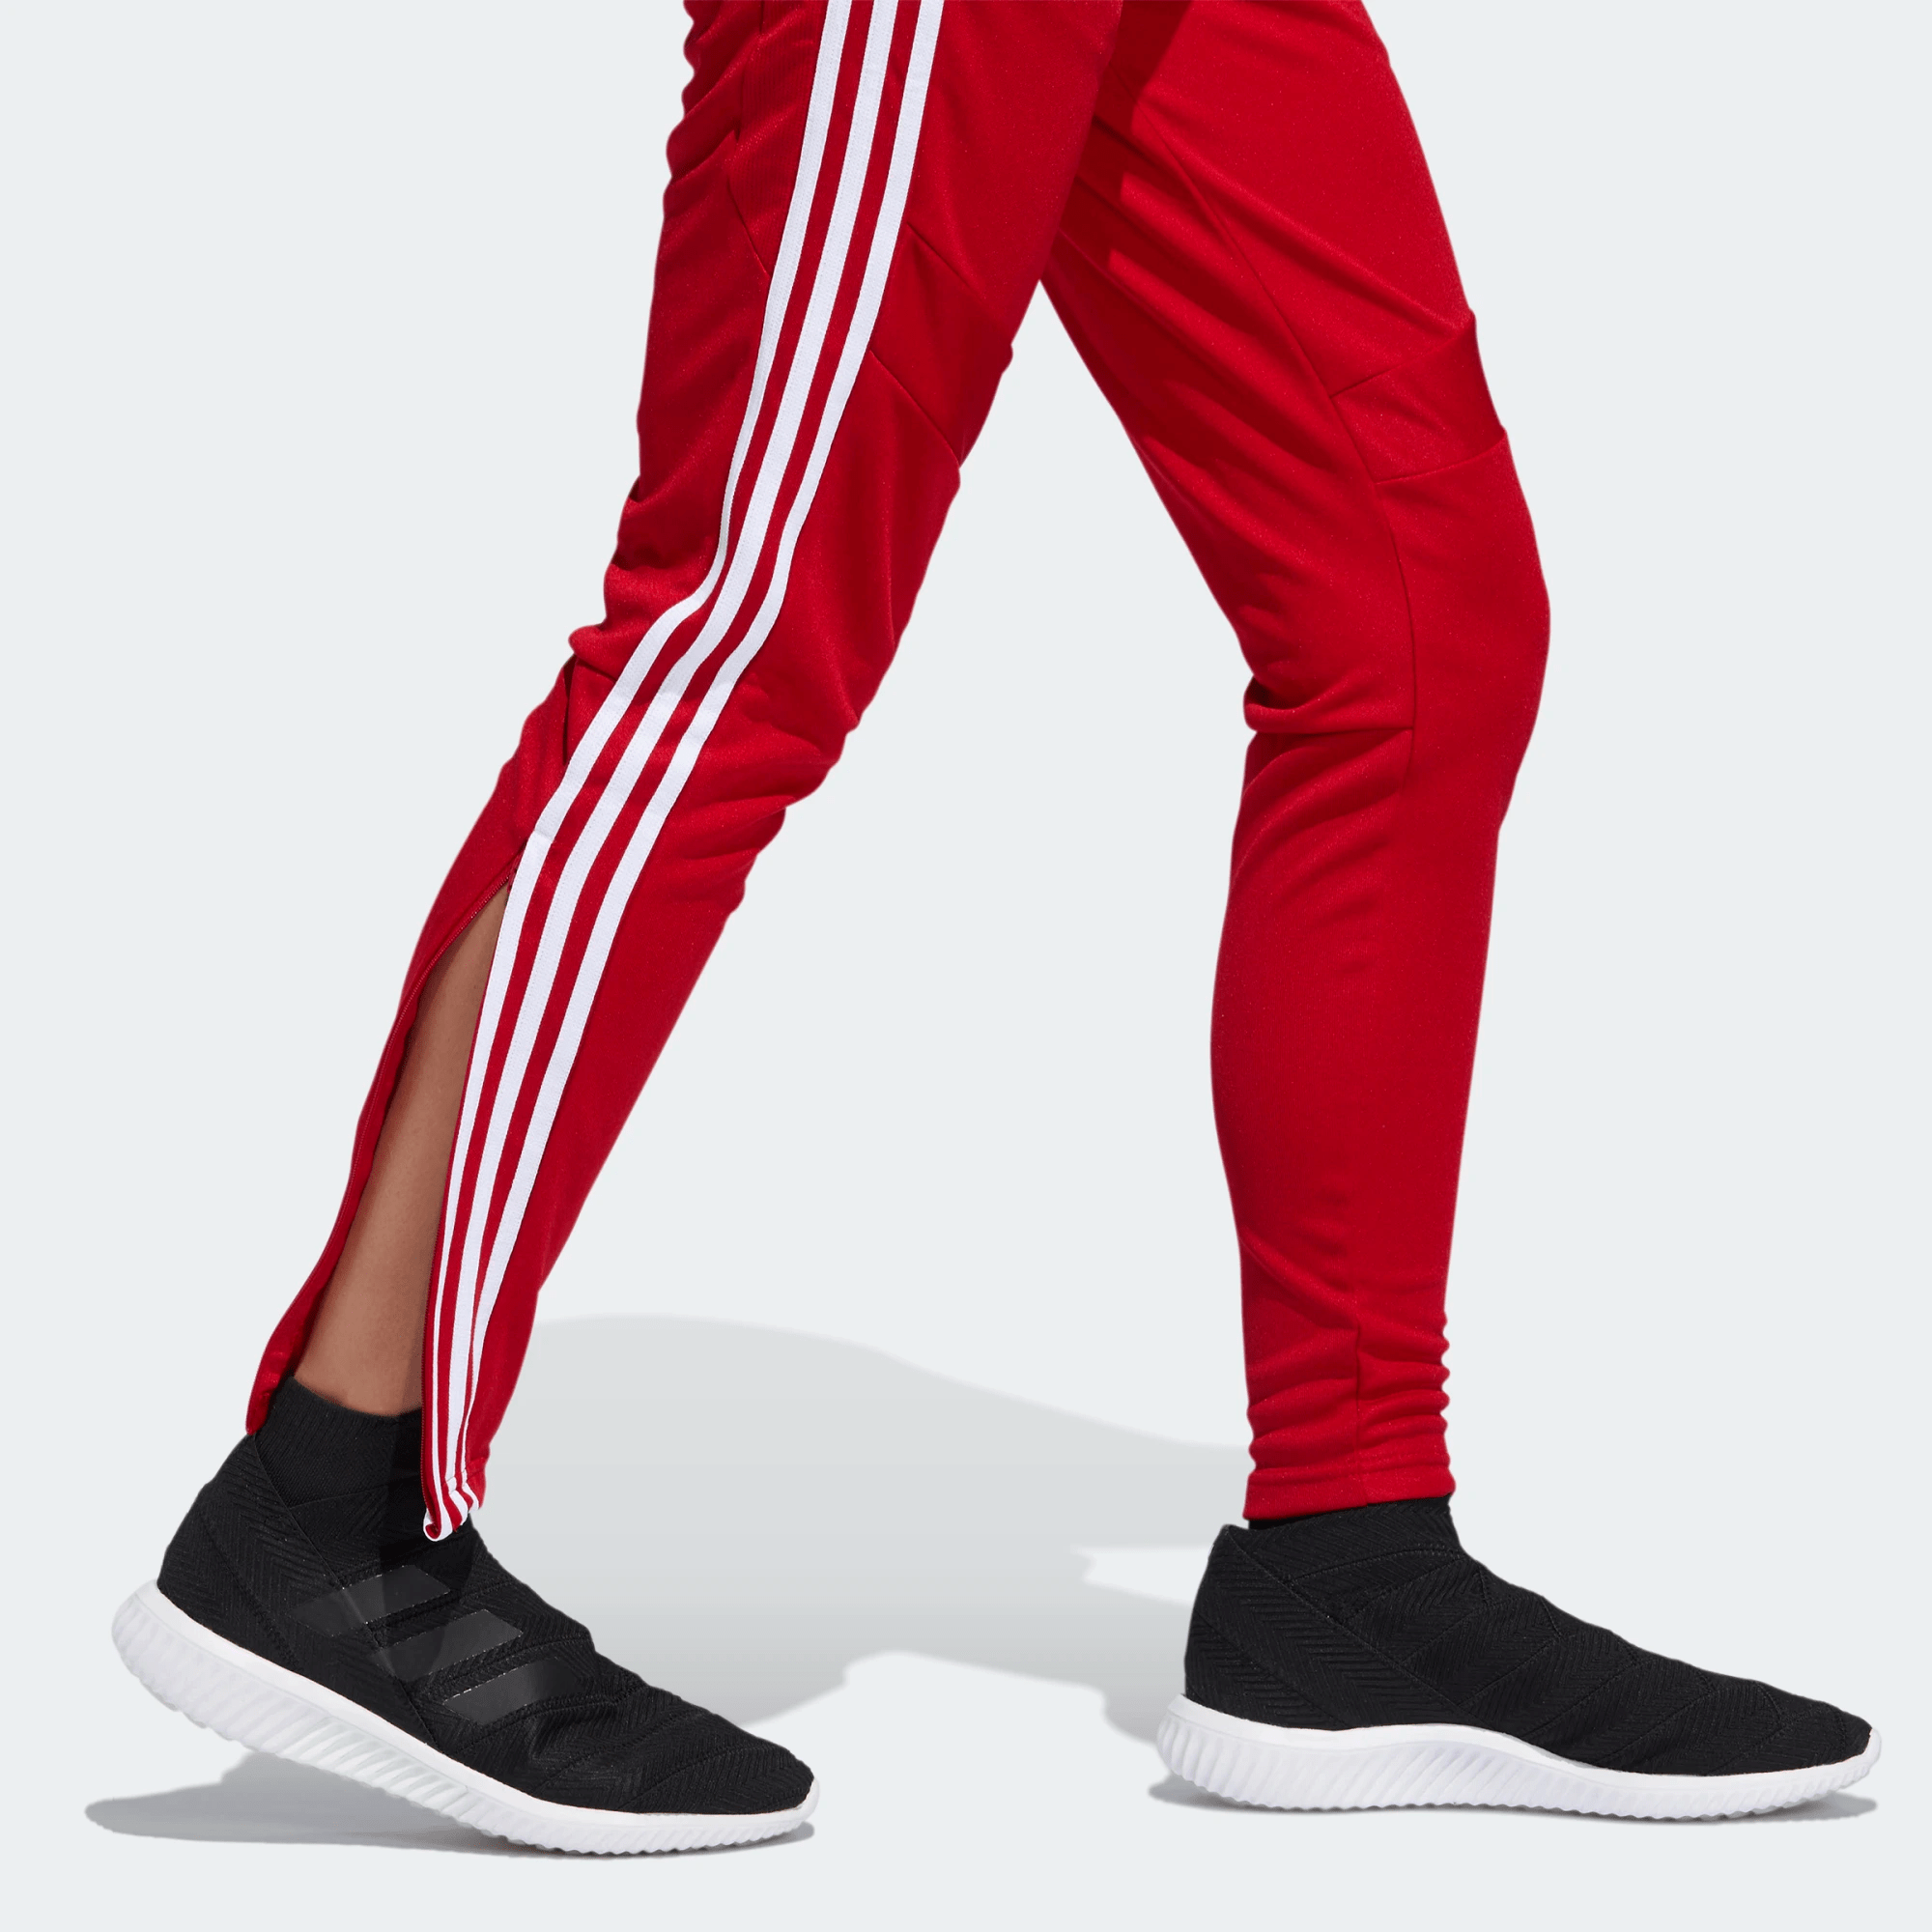 adidas Tiro 19 Men's Training Pants - Power Red/White, Size M for